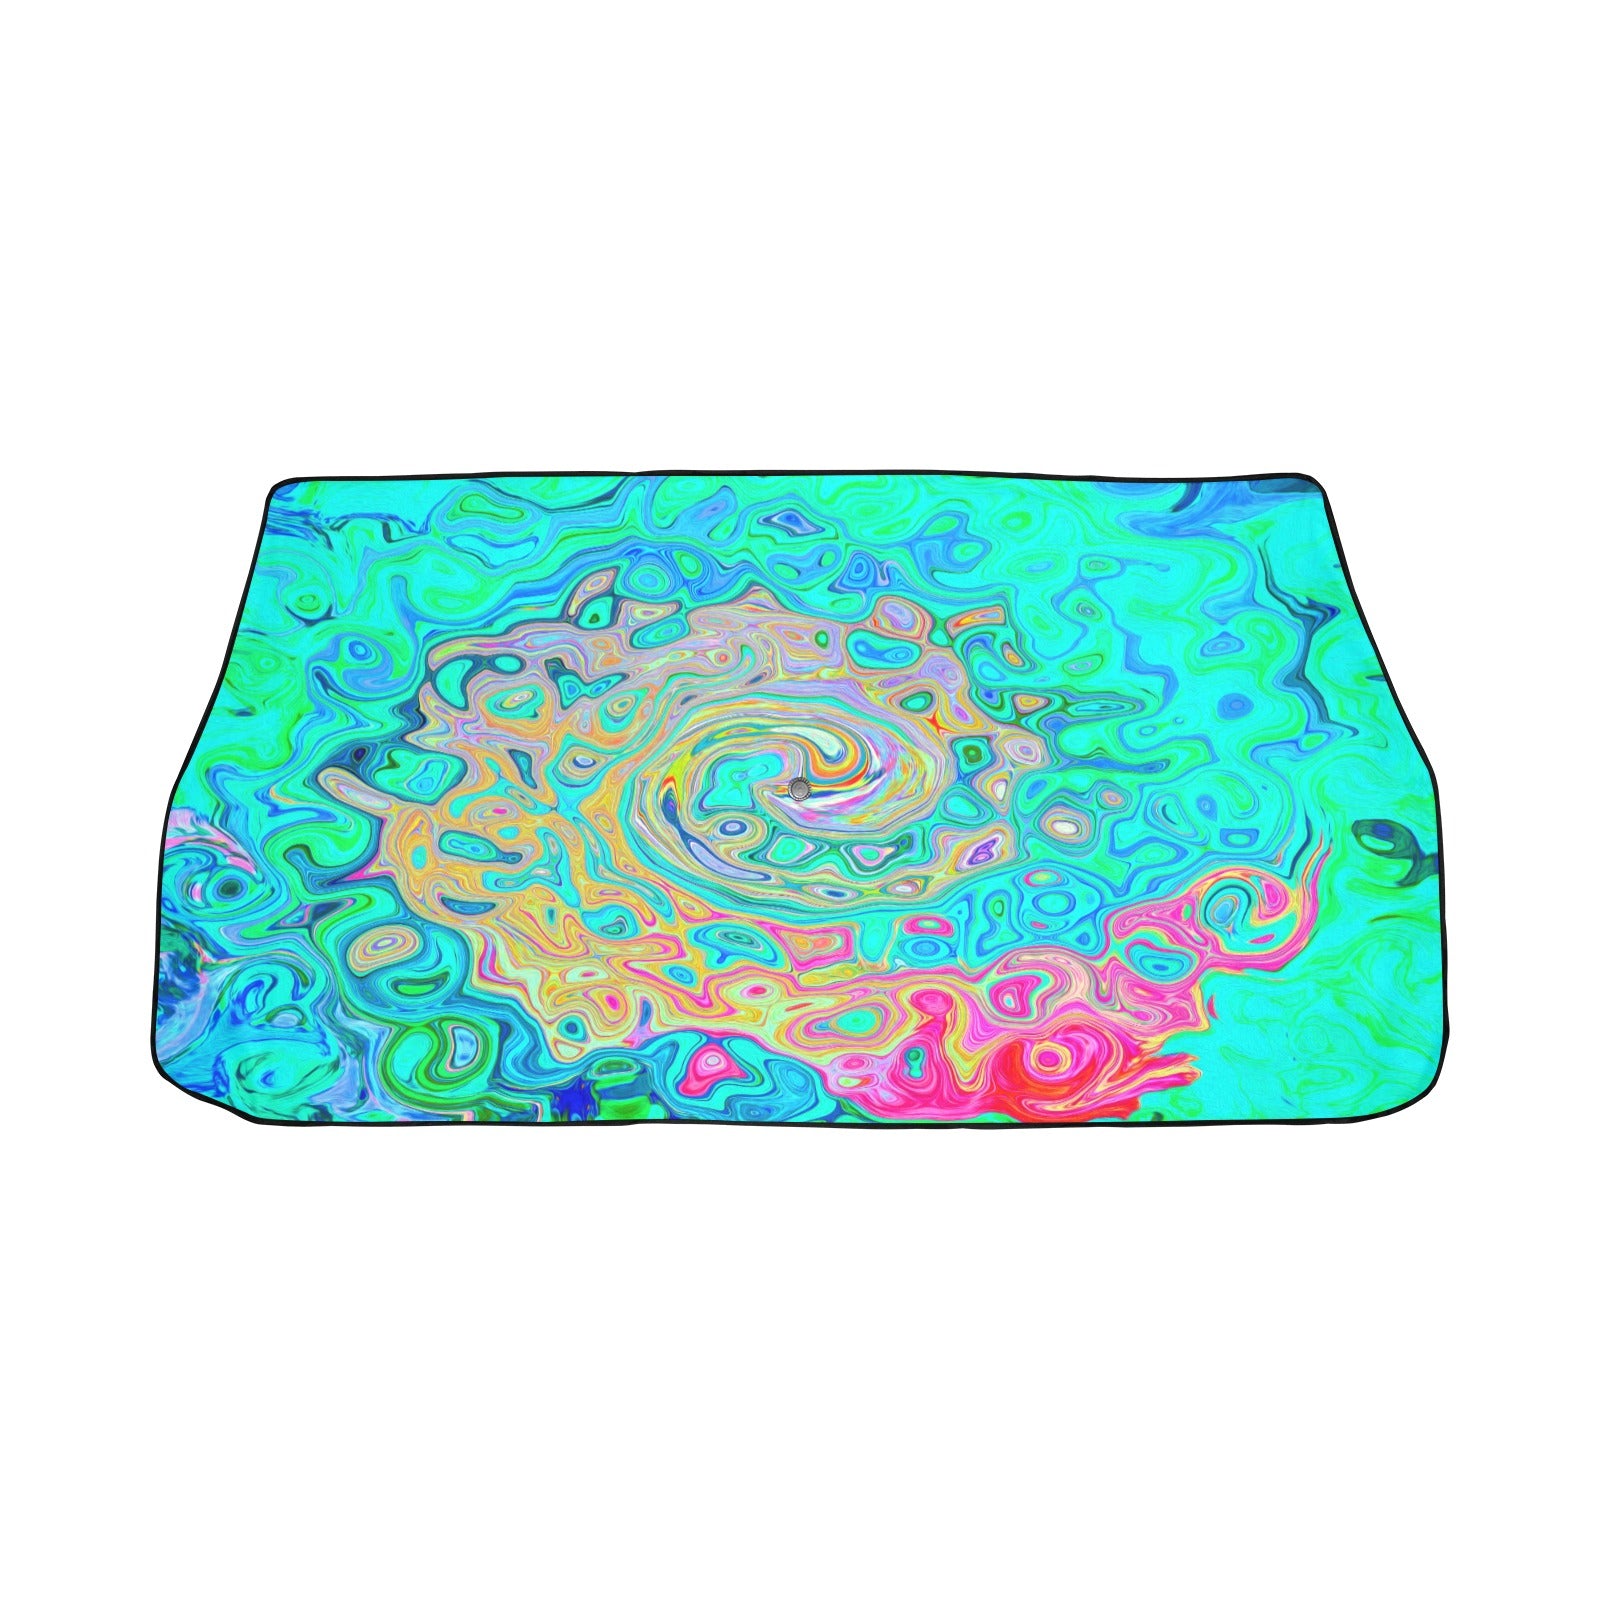 Car Umbrella Sunshades, Groovy Abstract Retro Rainbow Liquid Swirl